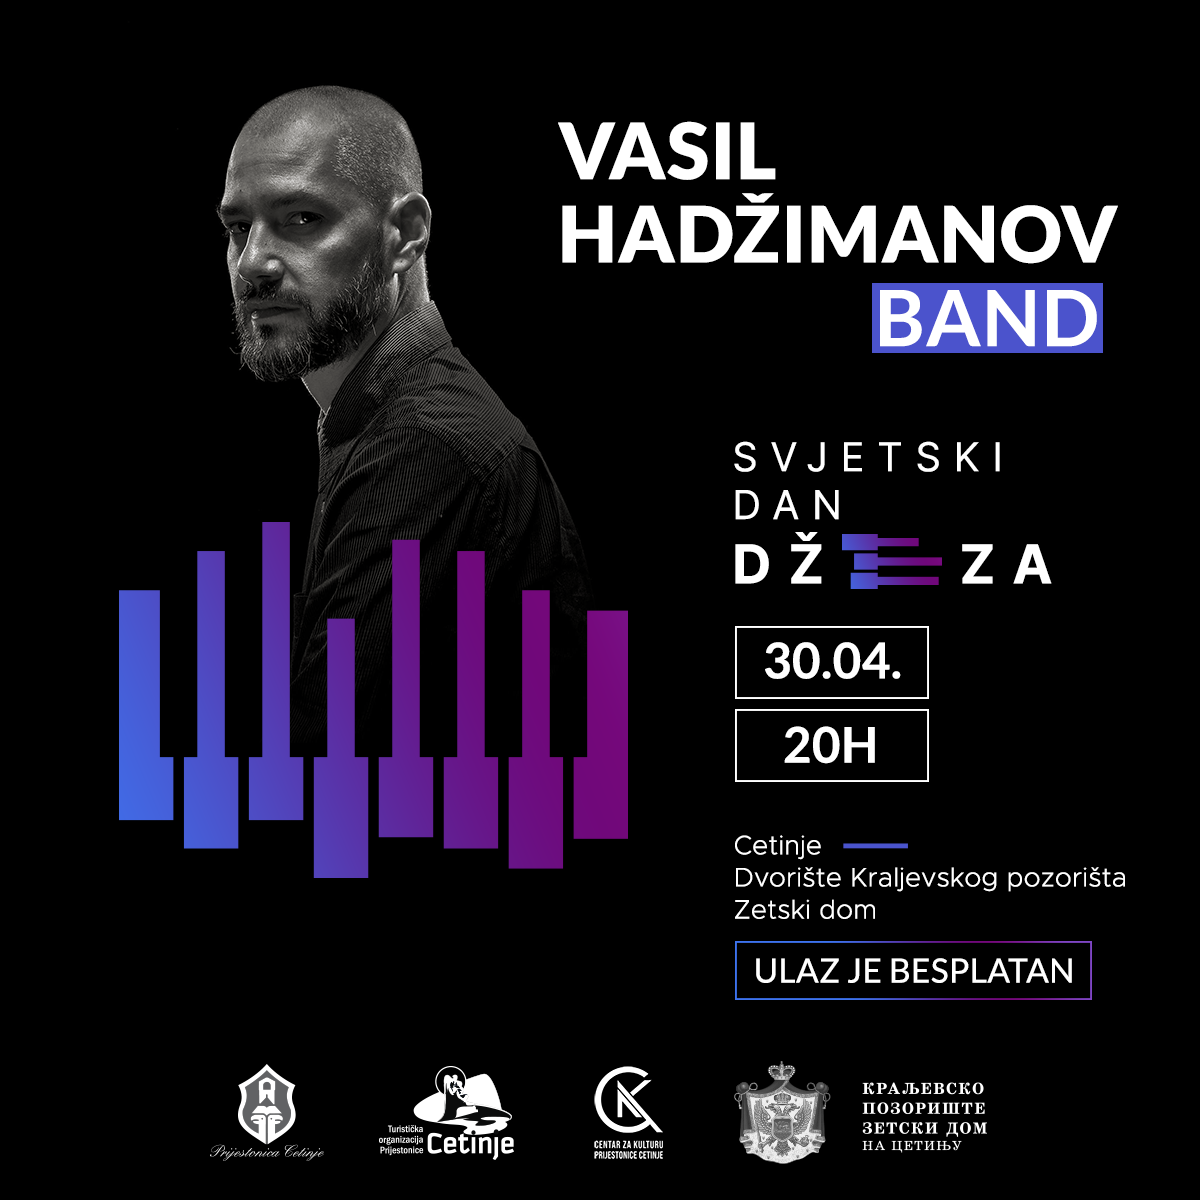 Koncert Vasil Hadžimanov benda 30. aprila na Cetinju